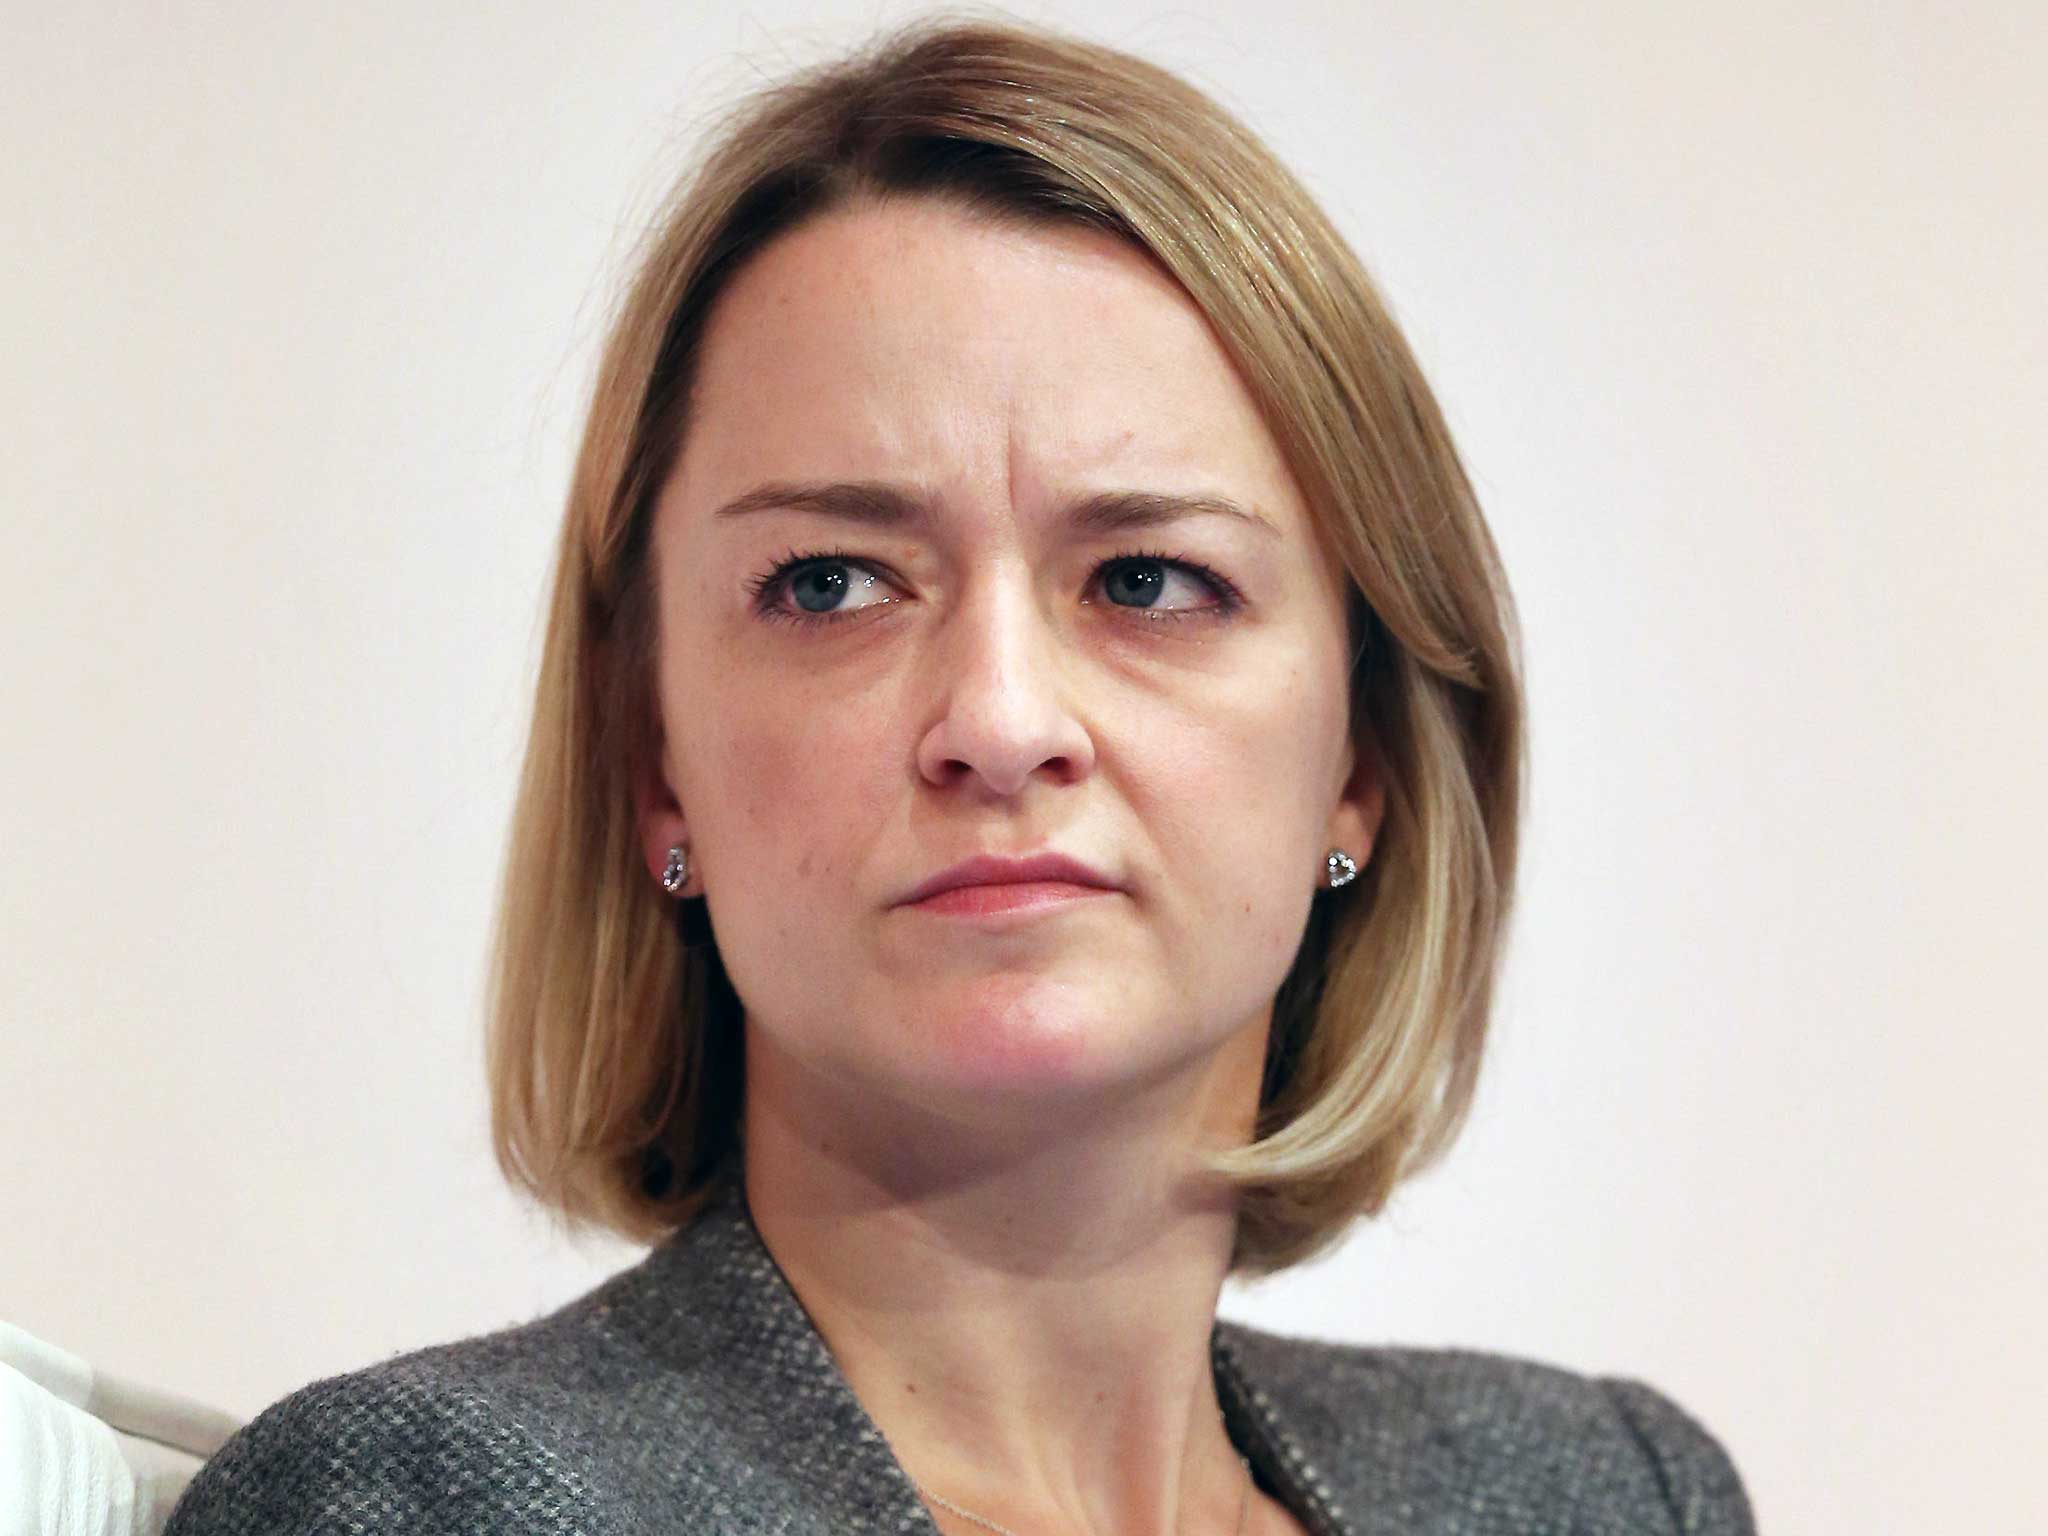 BBC political editor Laura Kuenssberg has been criticised for her online behaviour.